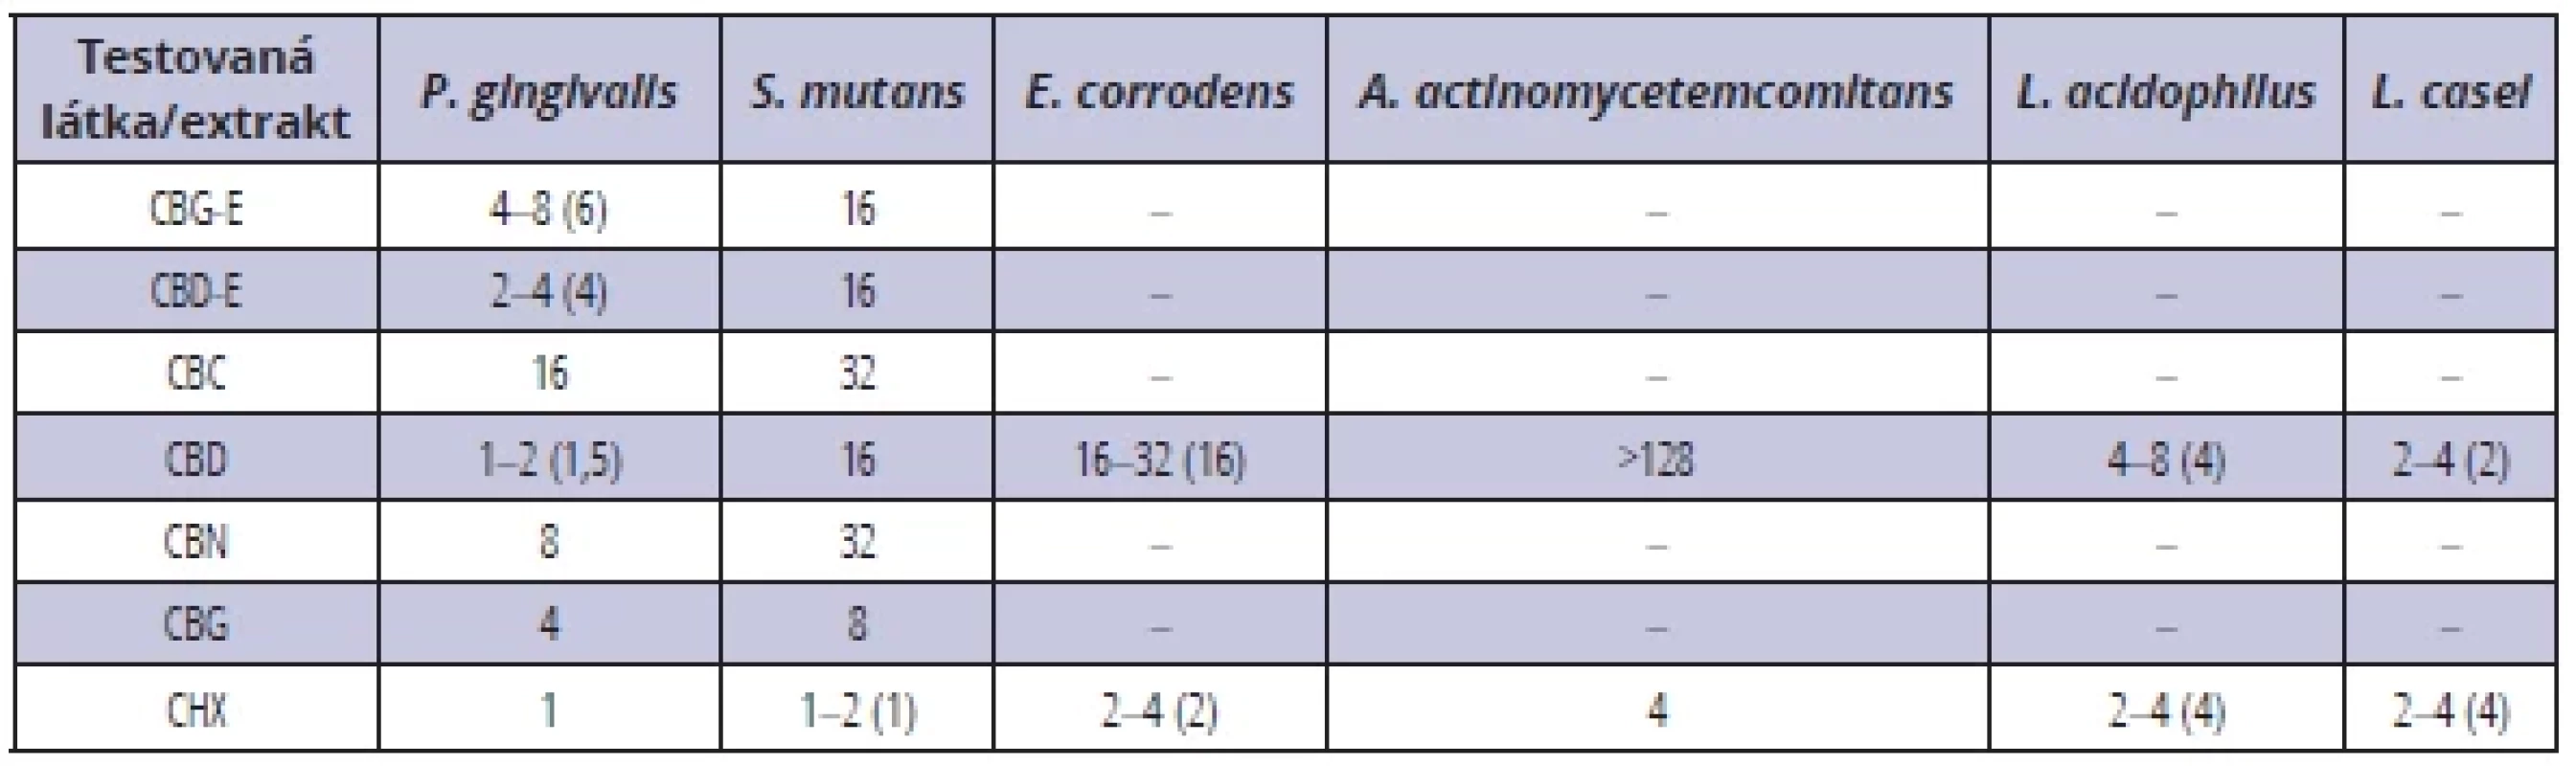 MIC (μg/ml) testovaných fytokanabinoidů a extraktů (CBD-E a CBG-E) ve srovnání
s chlorhexidinem (CHX). V tabulce je uveden rozsah naměřených hodnot, v závorce pak jejich medián. <br> 
Tab. 1. MIC (μg/ml) of tested phytocannabinoids and extracts (CBD-E and CBG-E) compared to
chlorhexidine (CHX). The range of measured values is shown in the table, with their median in brackets.